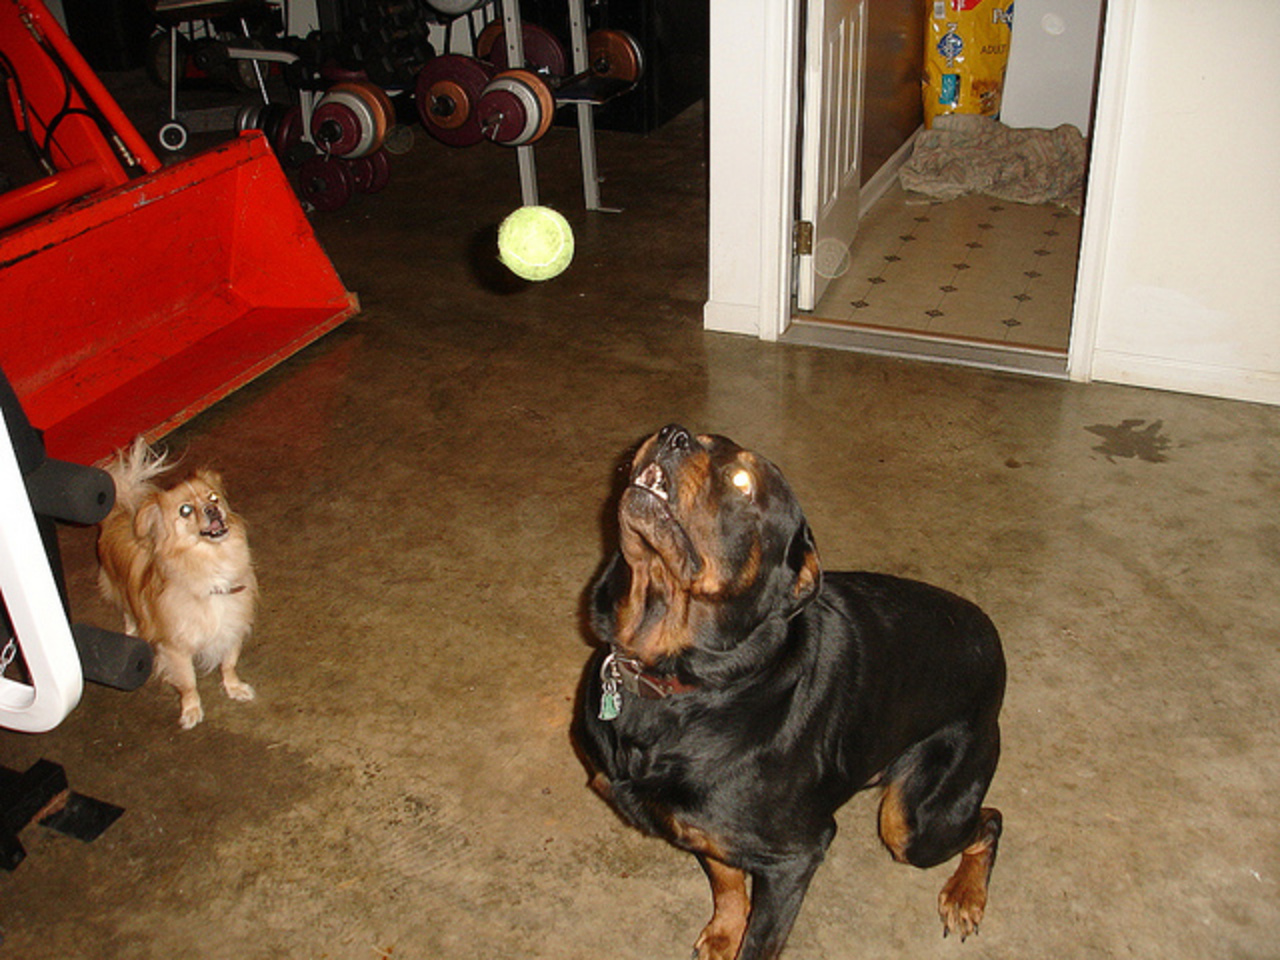 Kubota B3030 2005 et Rottweiler (3) / Flickr - Partage de photos!